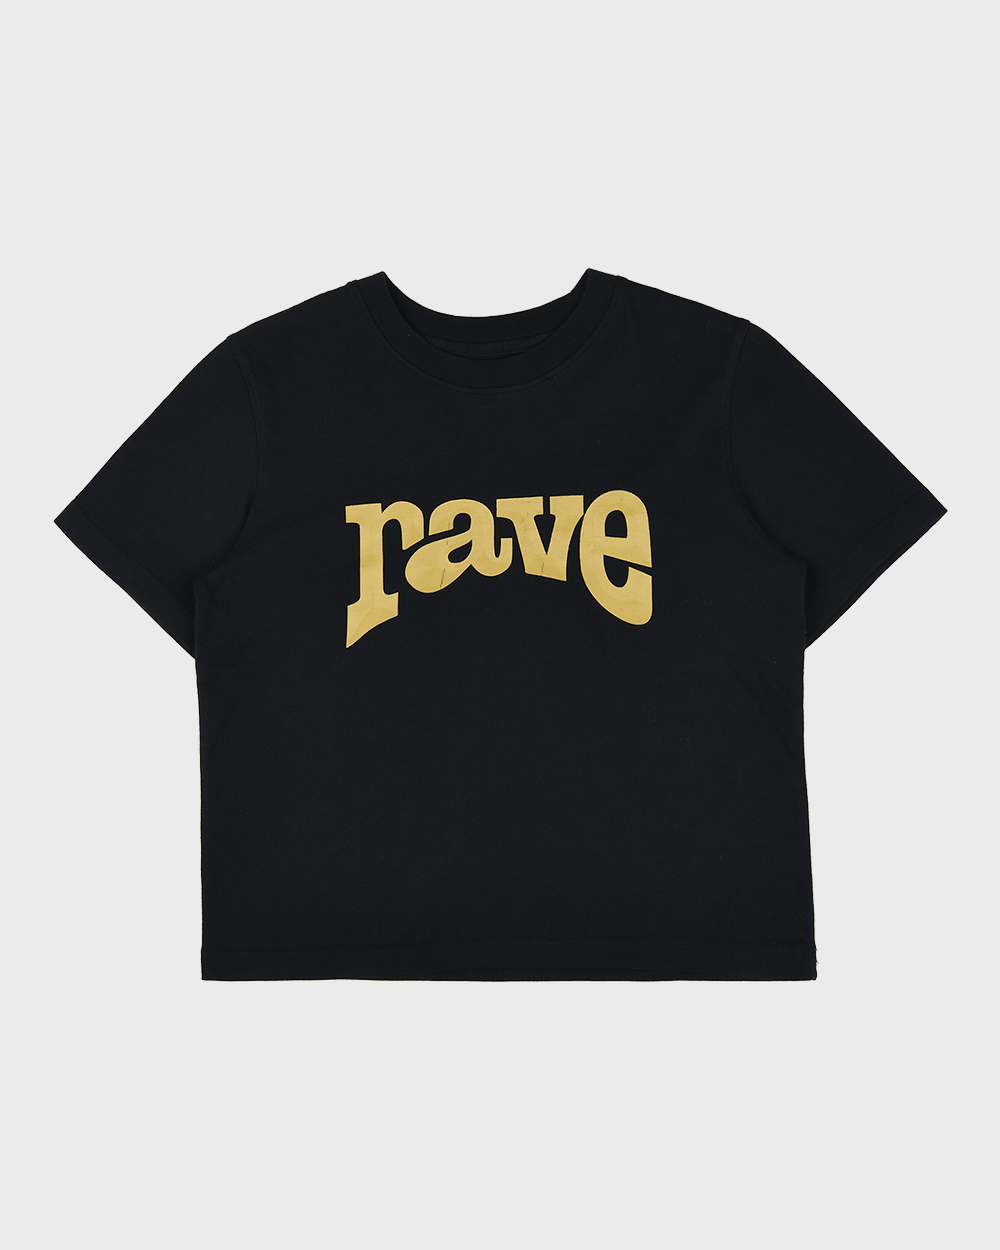 aeae RAVE Crop T-Shirts (Black)